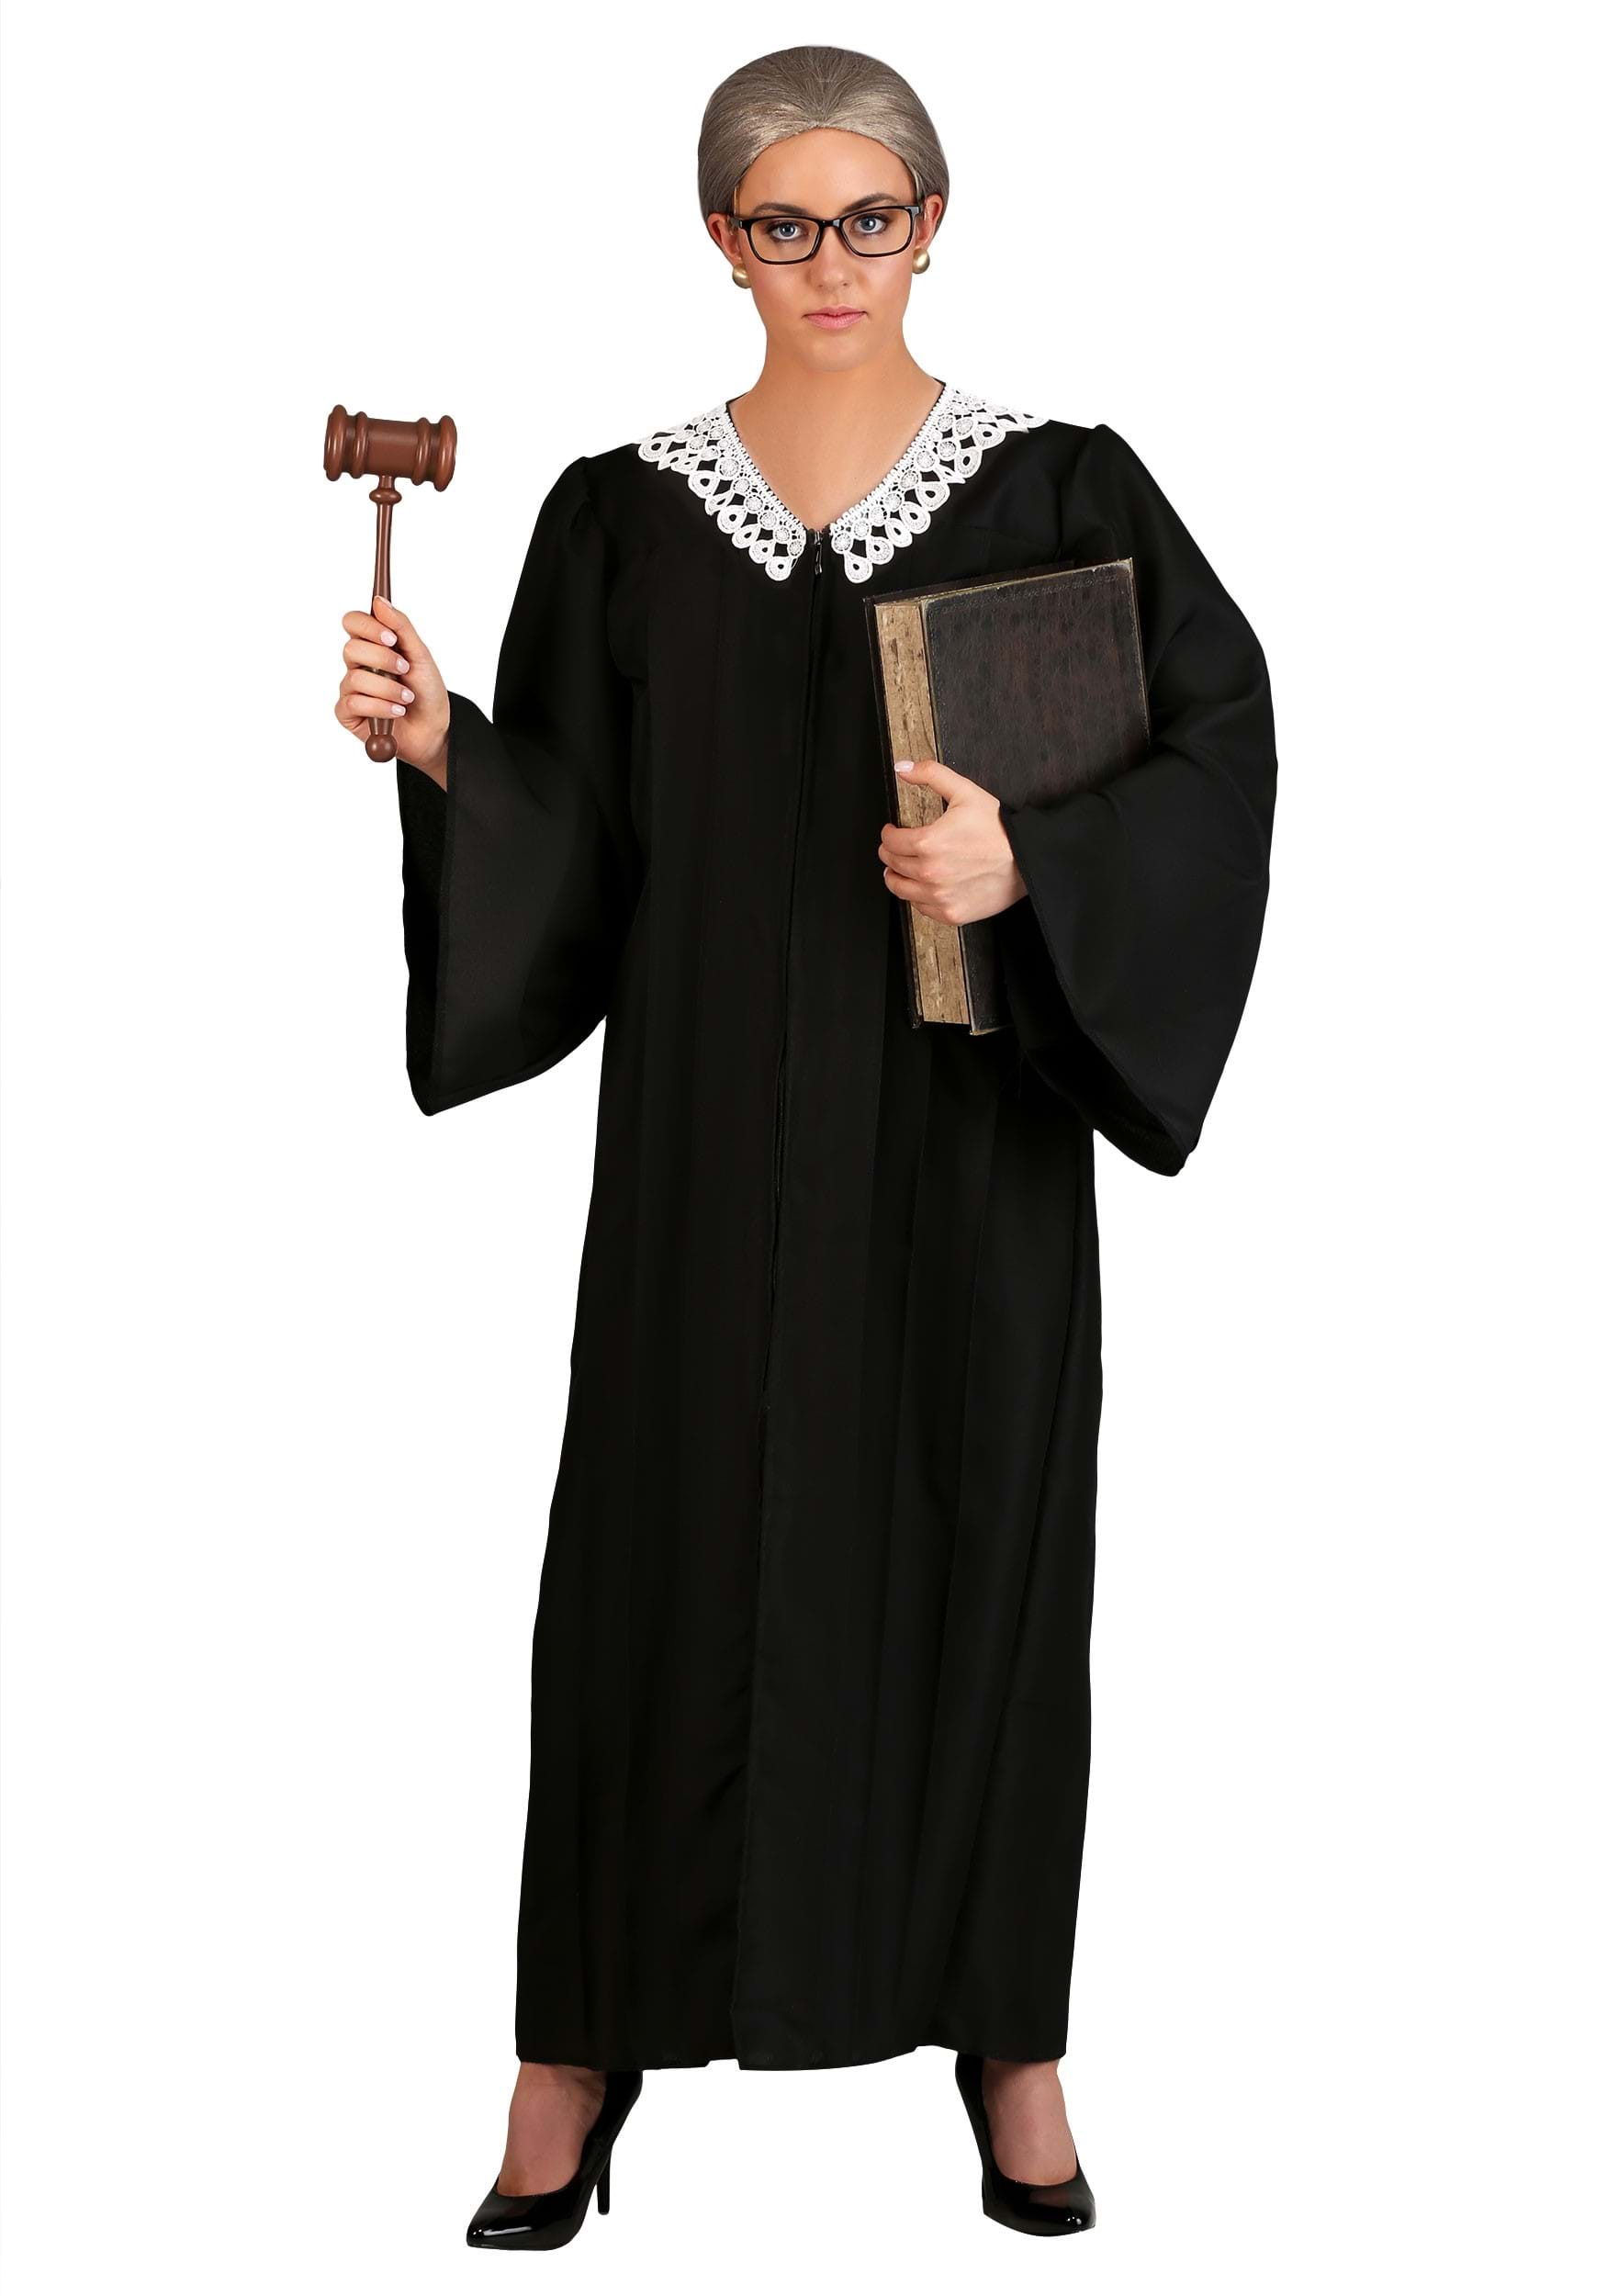 Supreme Court Judge Women’s Costume